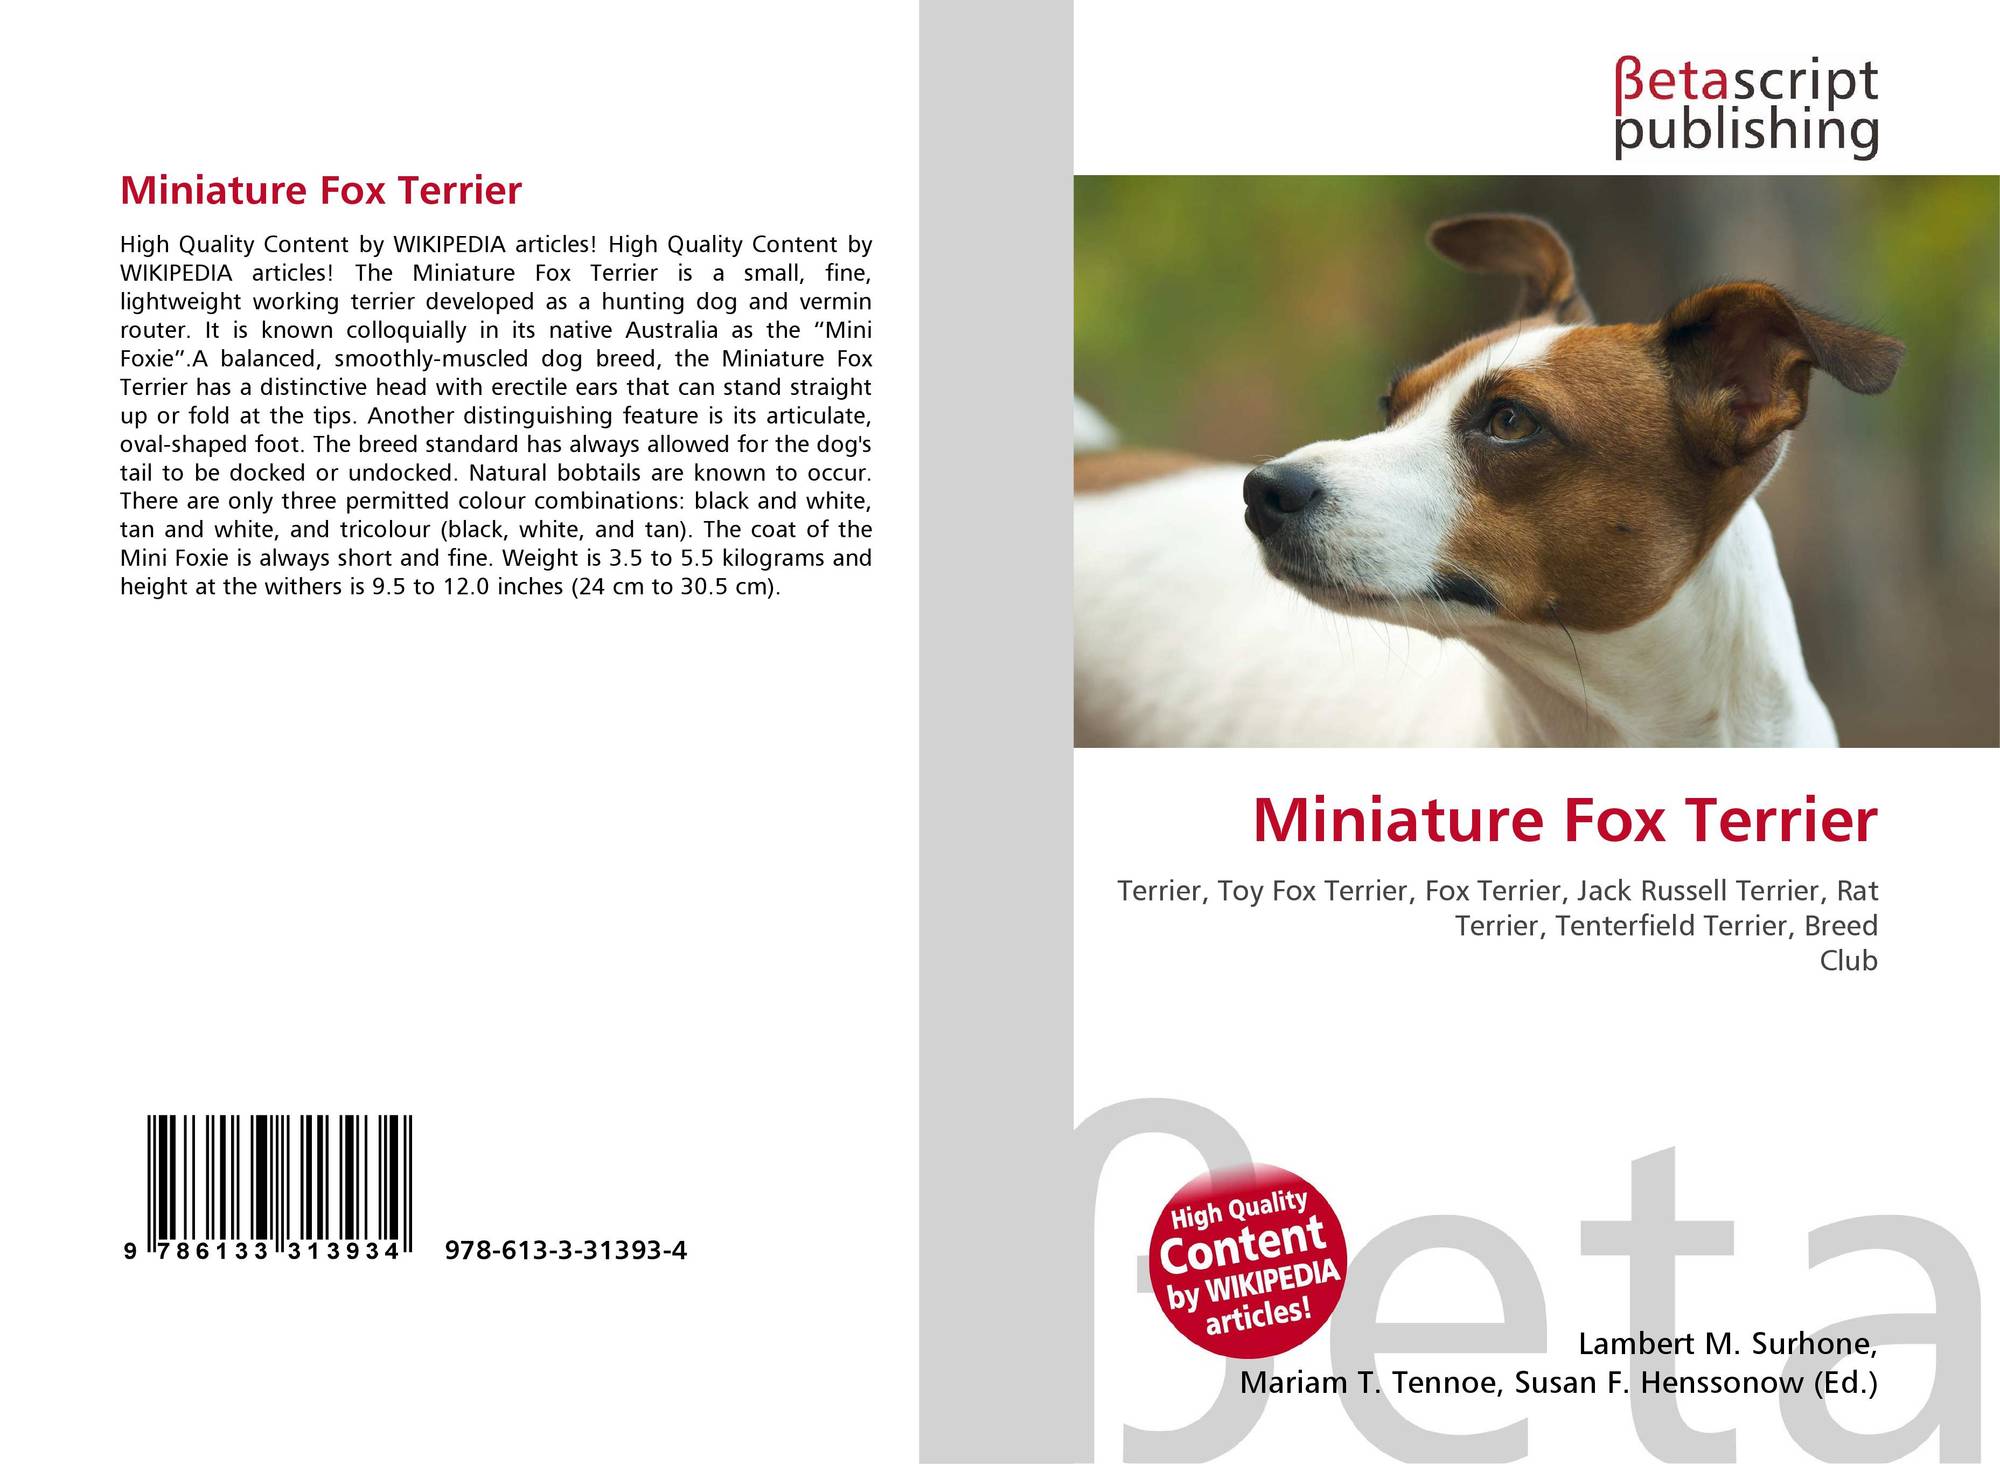 Miniature Fox Terrier 978 613 3 31393 4 6133313935 9786133313934